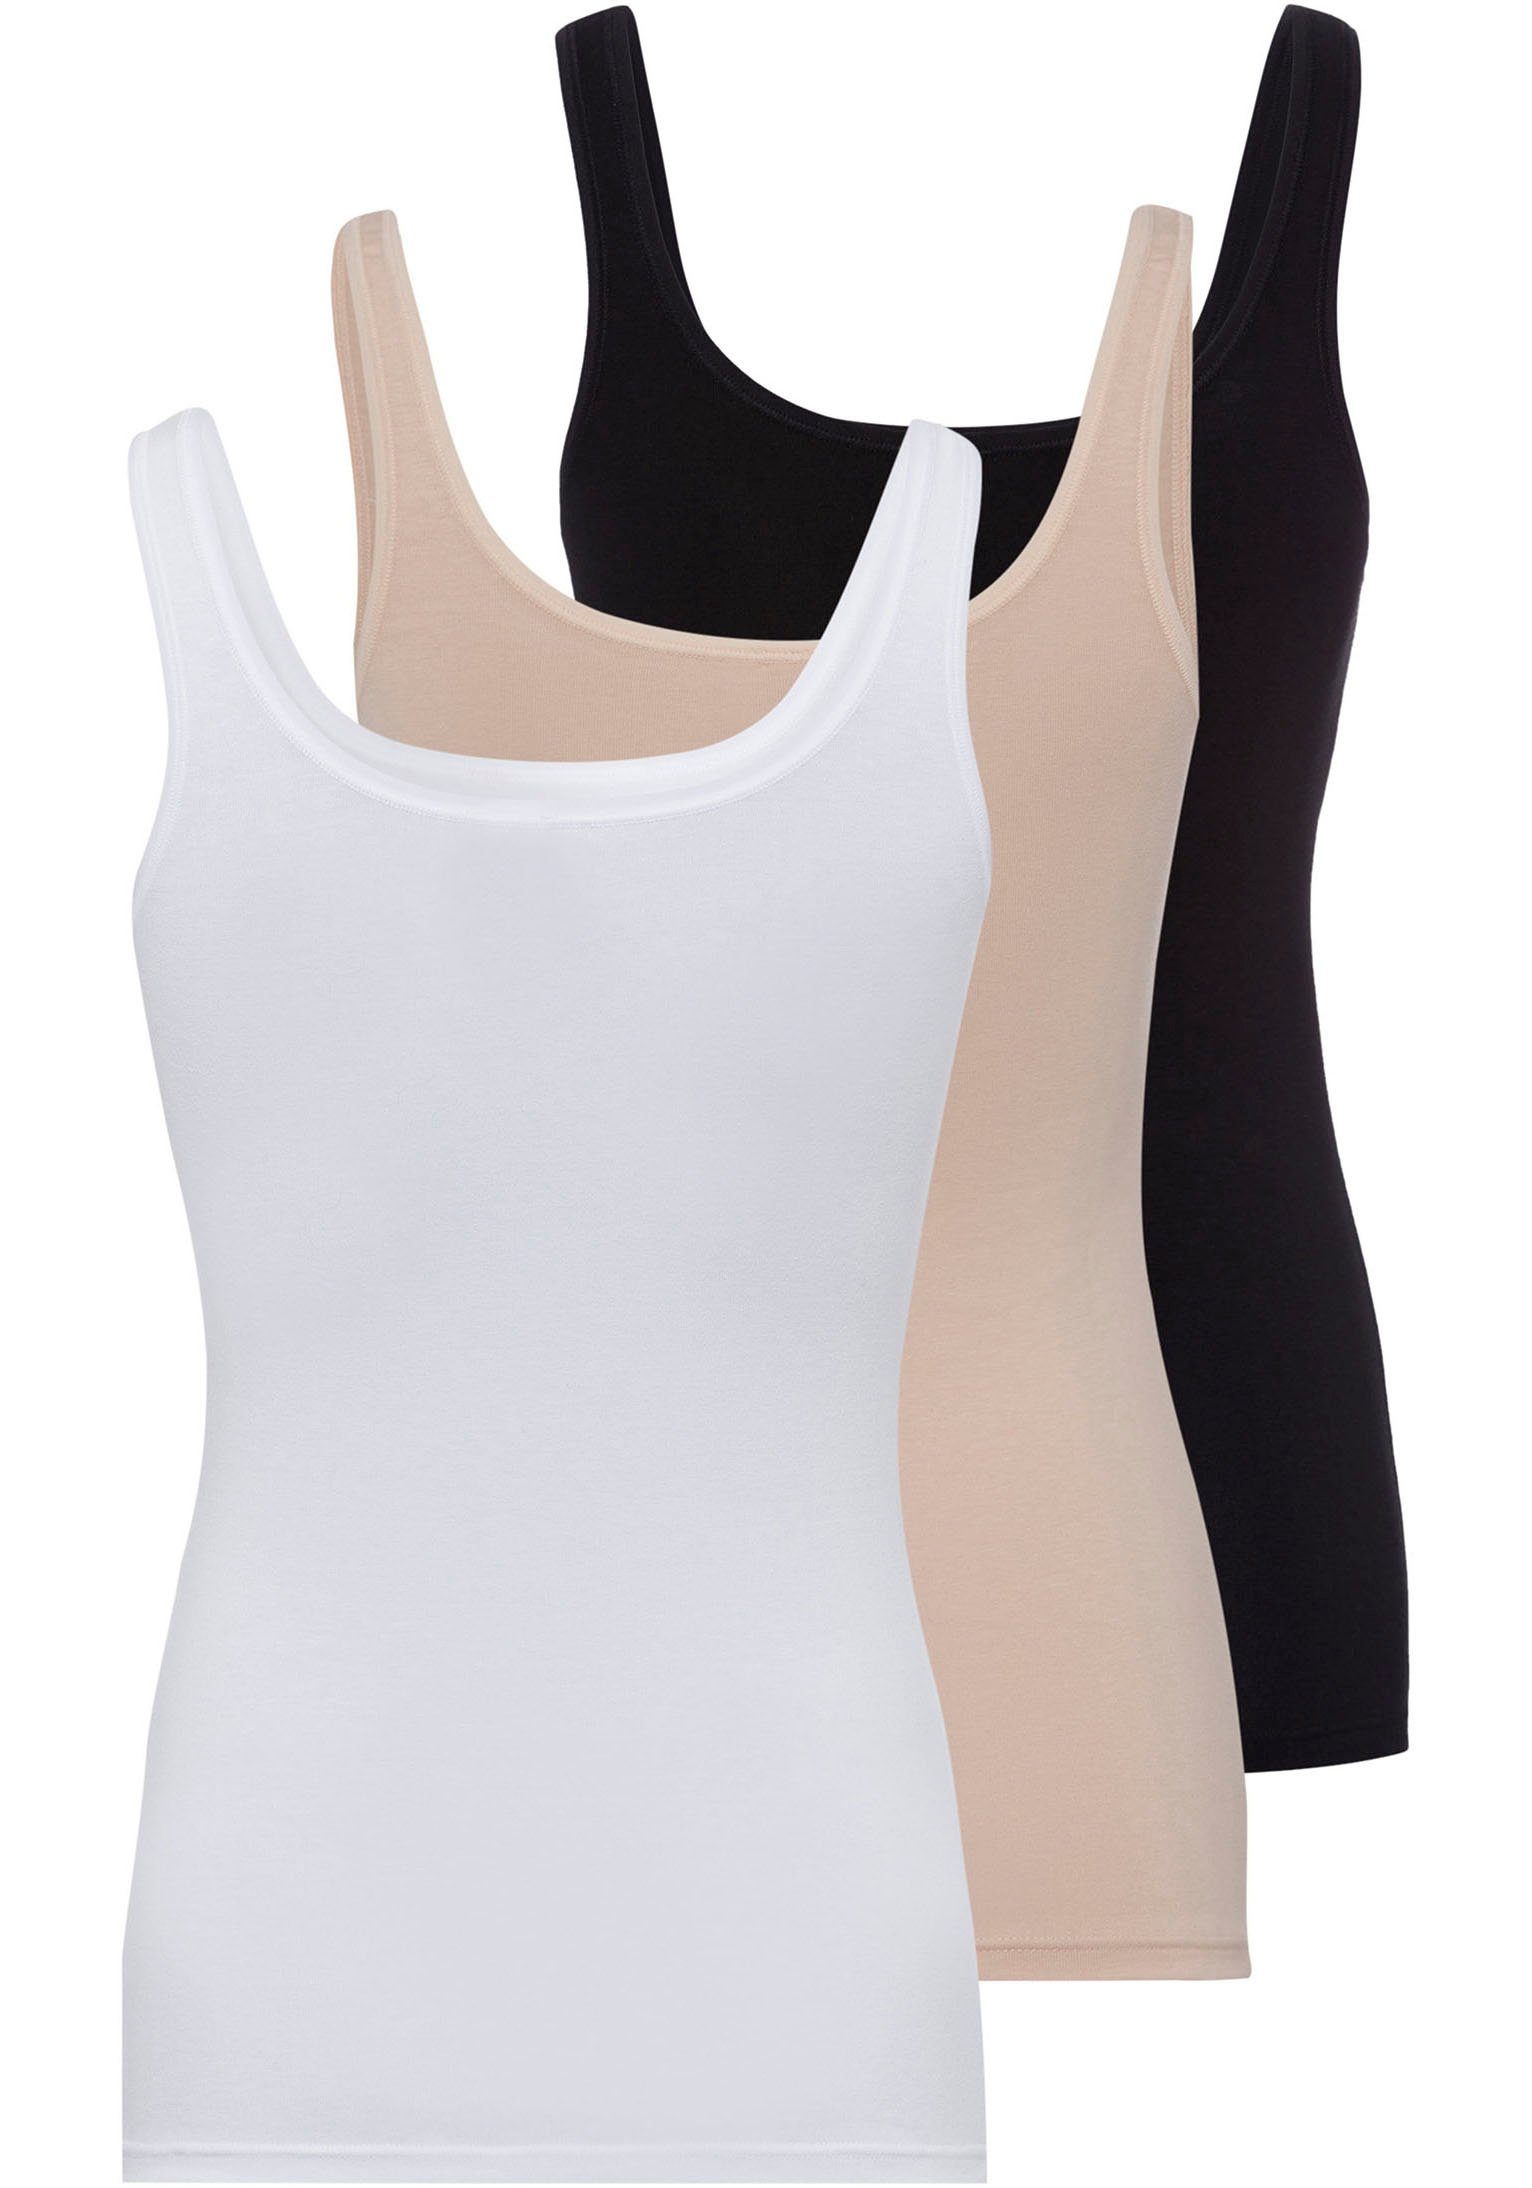 Kassierer/Kassiererin Skiny Unterhemd Cotton (3-St) Tank Top